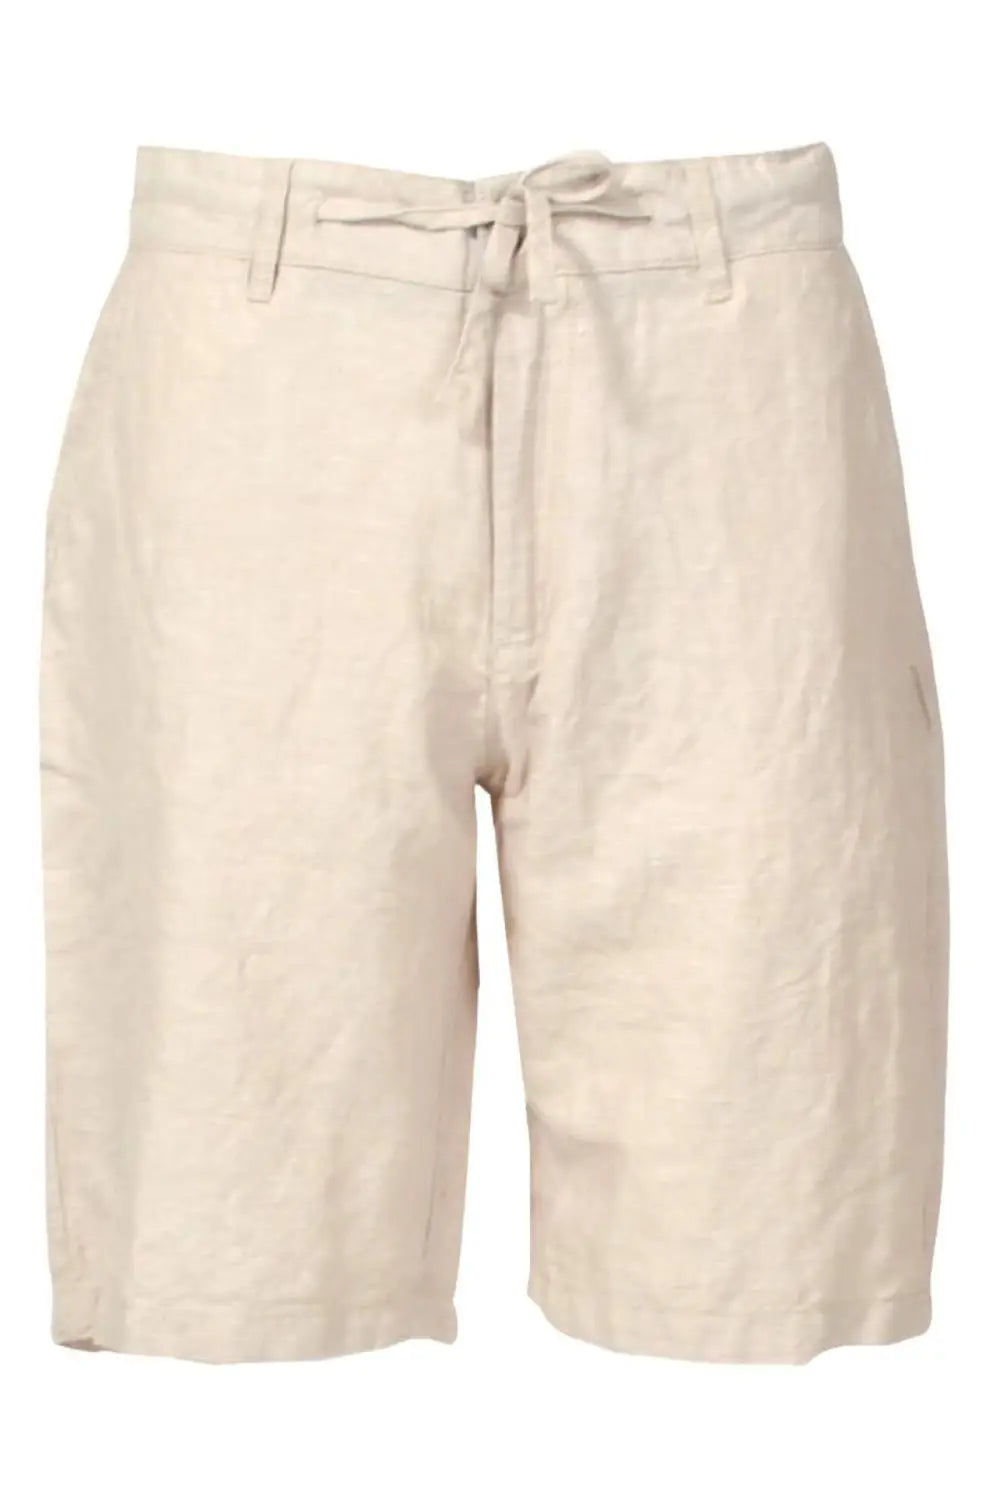 S.M.O.G. Classic Linen Shorts